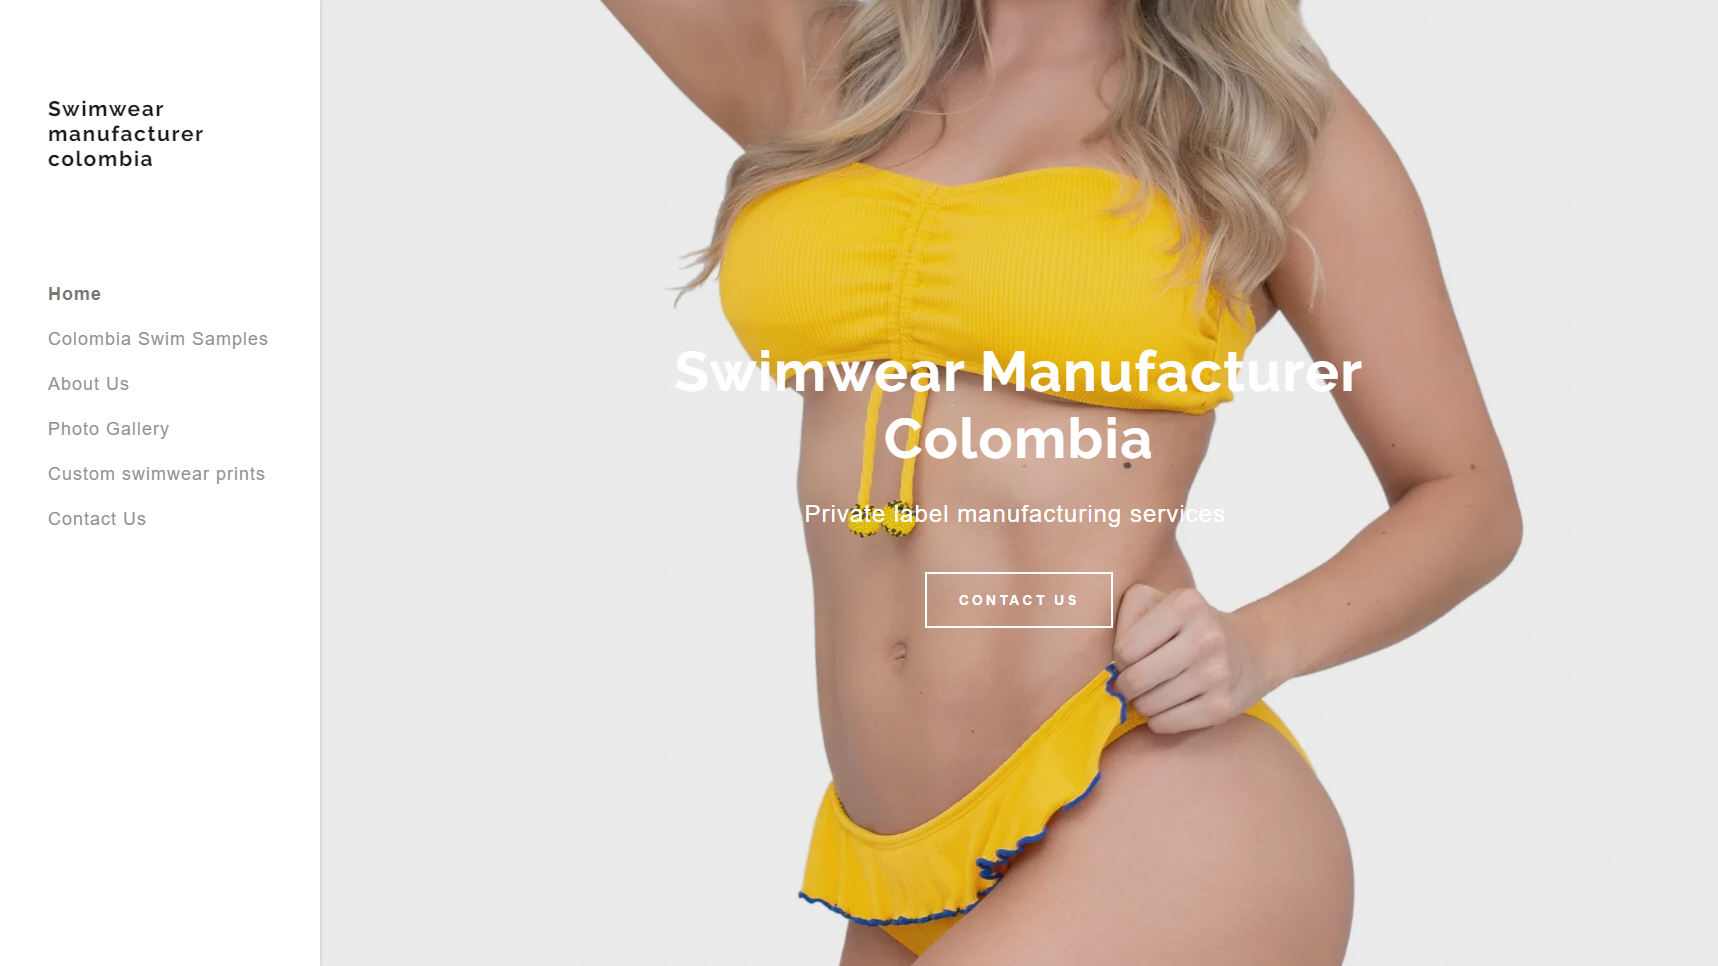 Swimwear Manufacturer Colombia - Swimwear Manufacturer